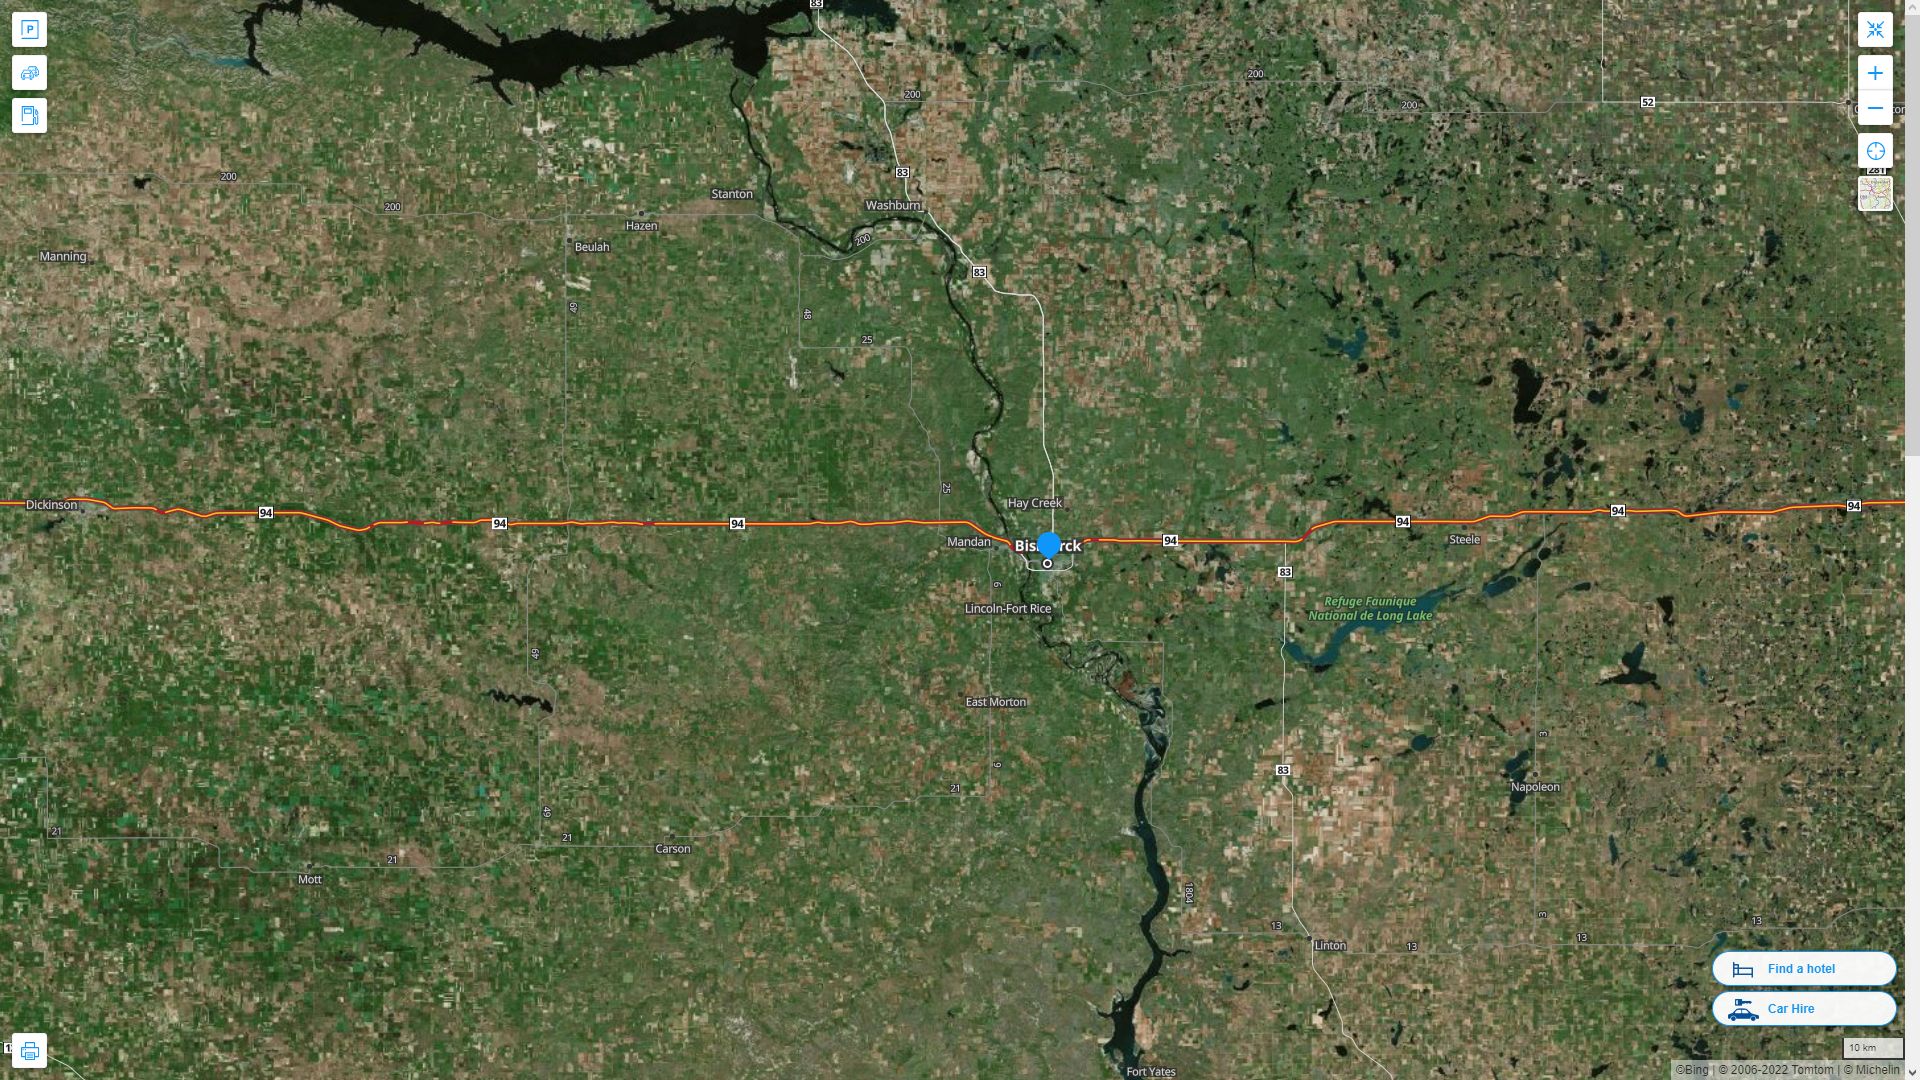 Bismarck North Dakota Highway and Road Map with Satellite View